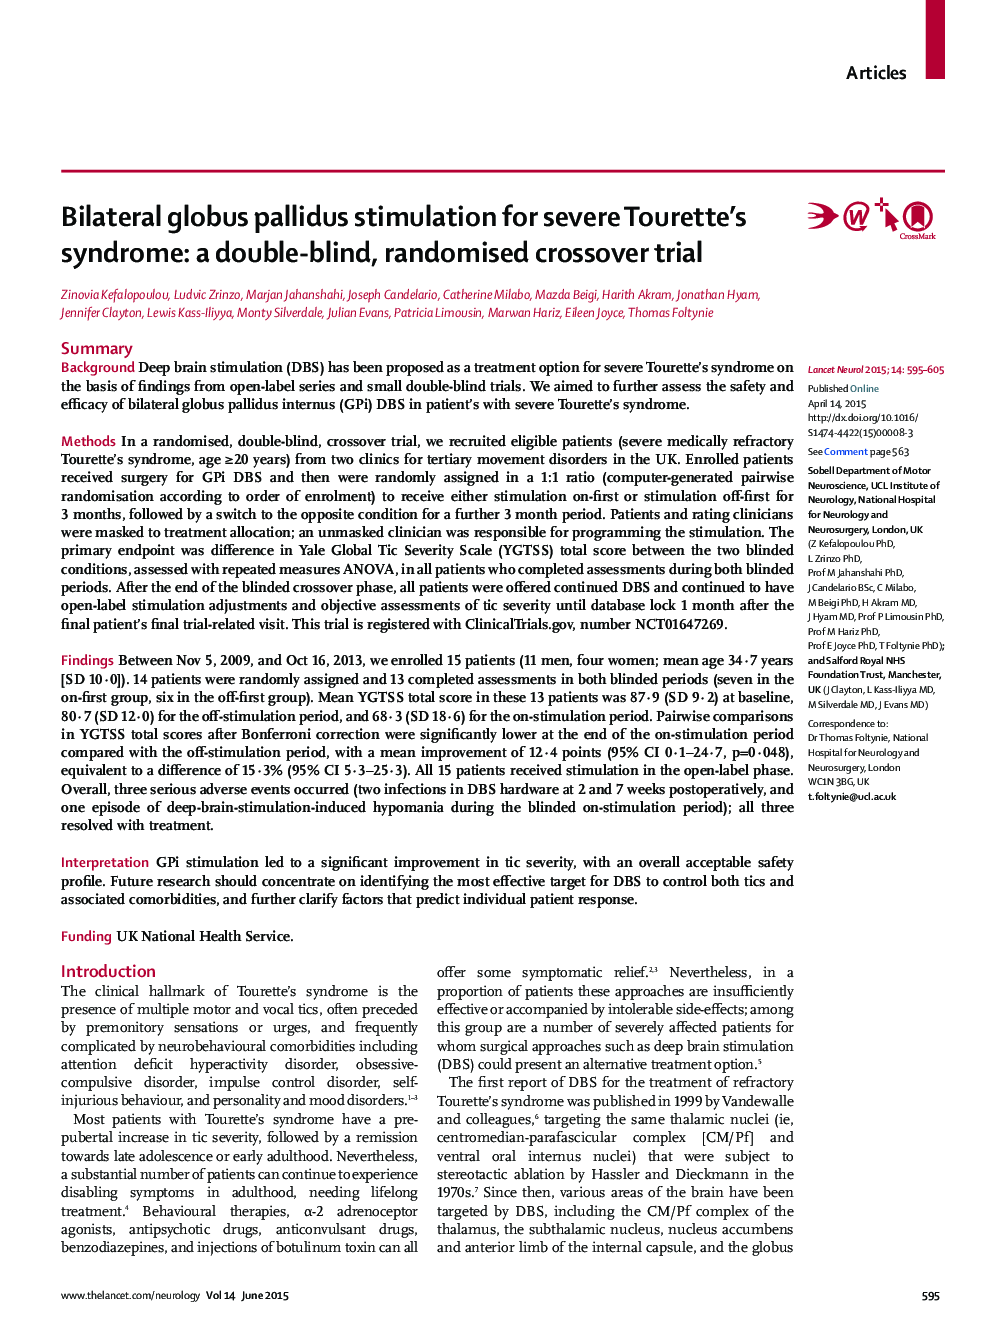 Bilateral globus pallidus stimulation for severe Tourette's syndrome: a double-blind, randomised crossover trial